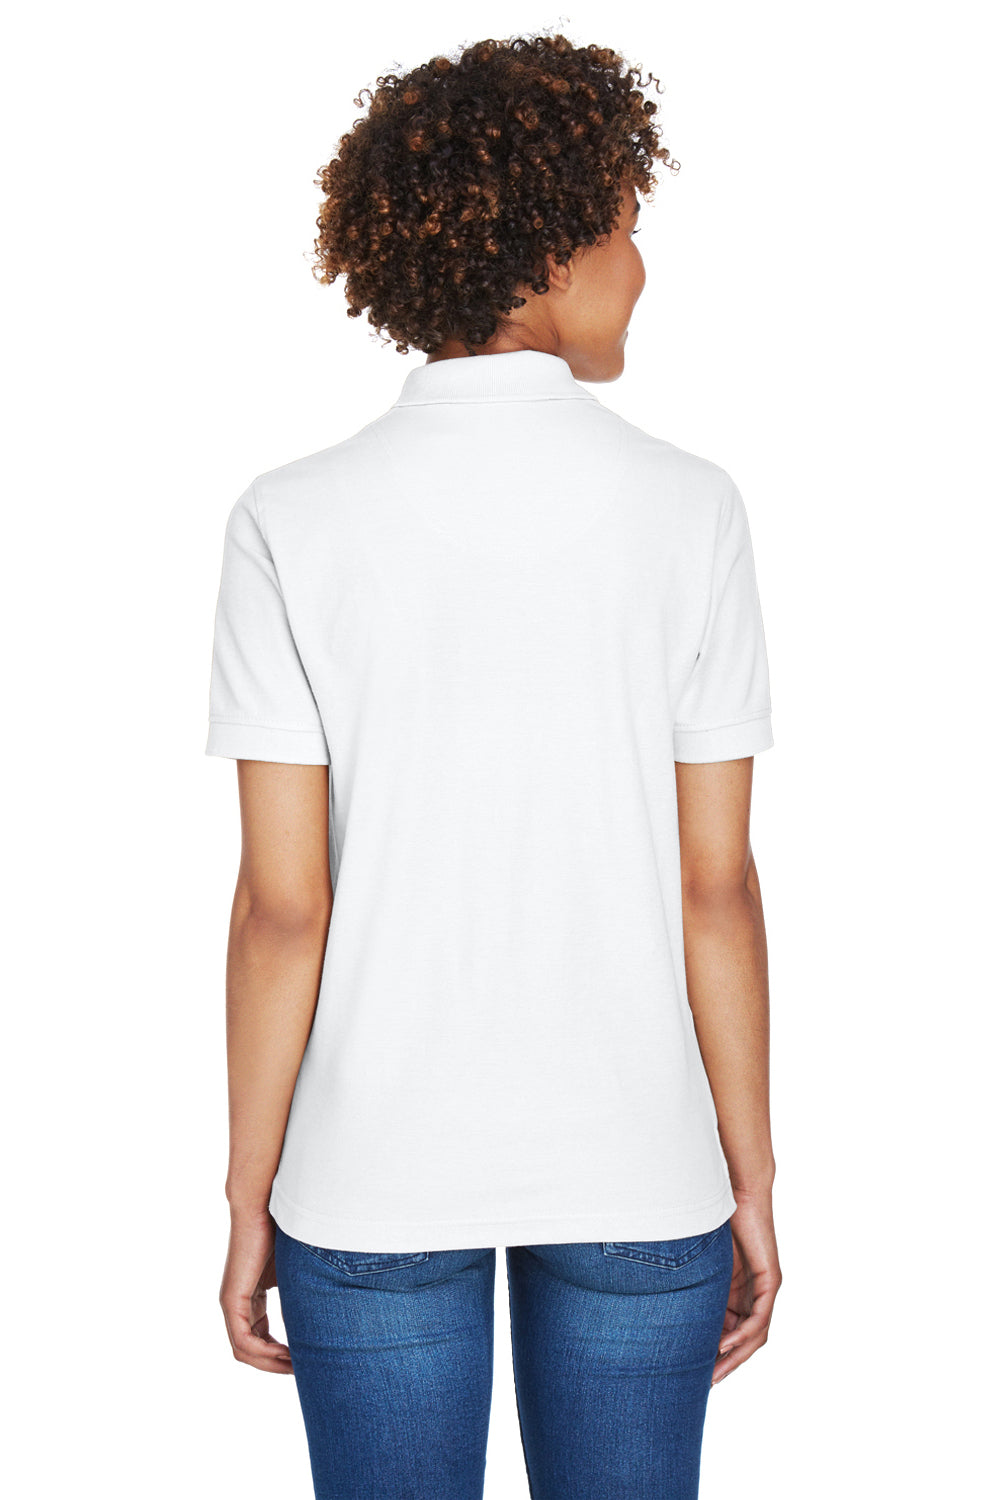 UltraClub 8541 Womens Whisper Short Sleeve Polo Shirt White Back